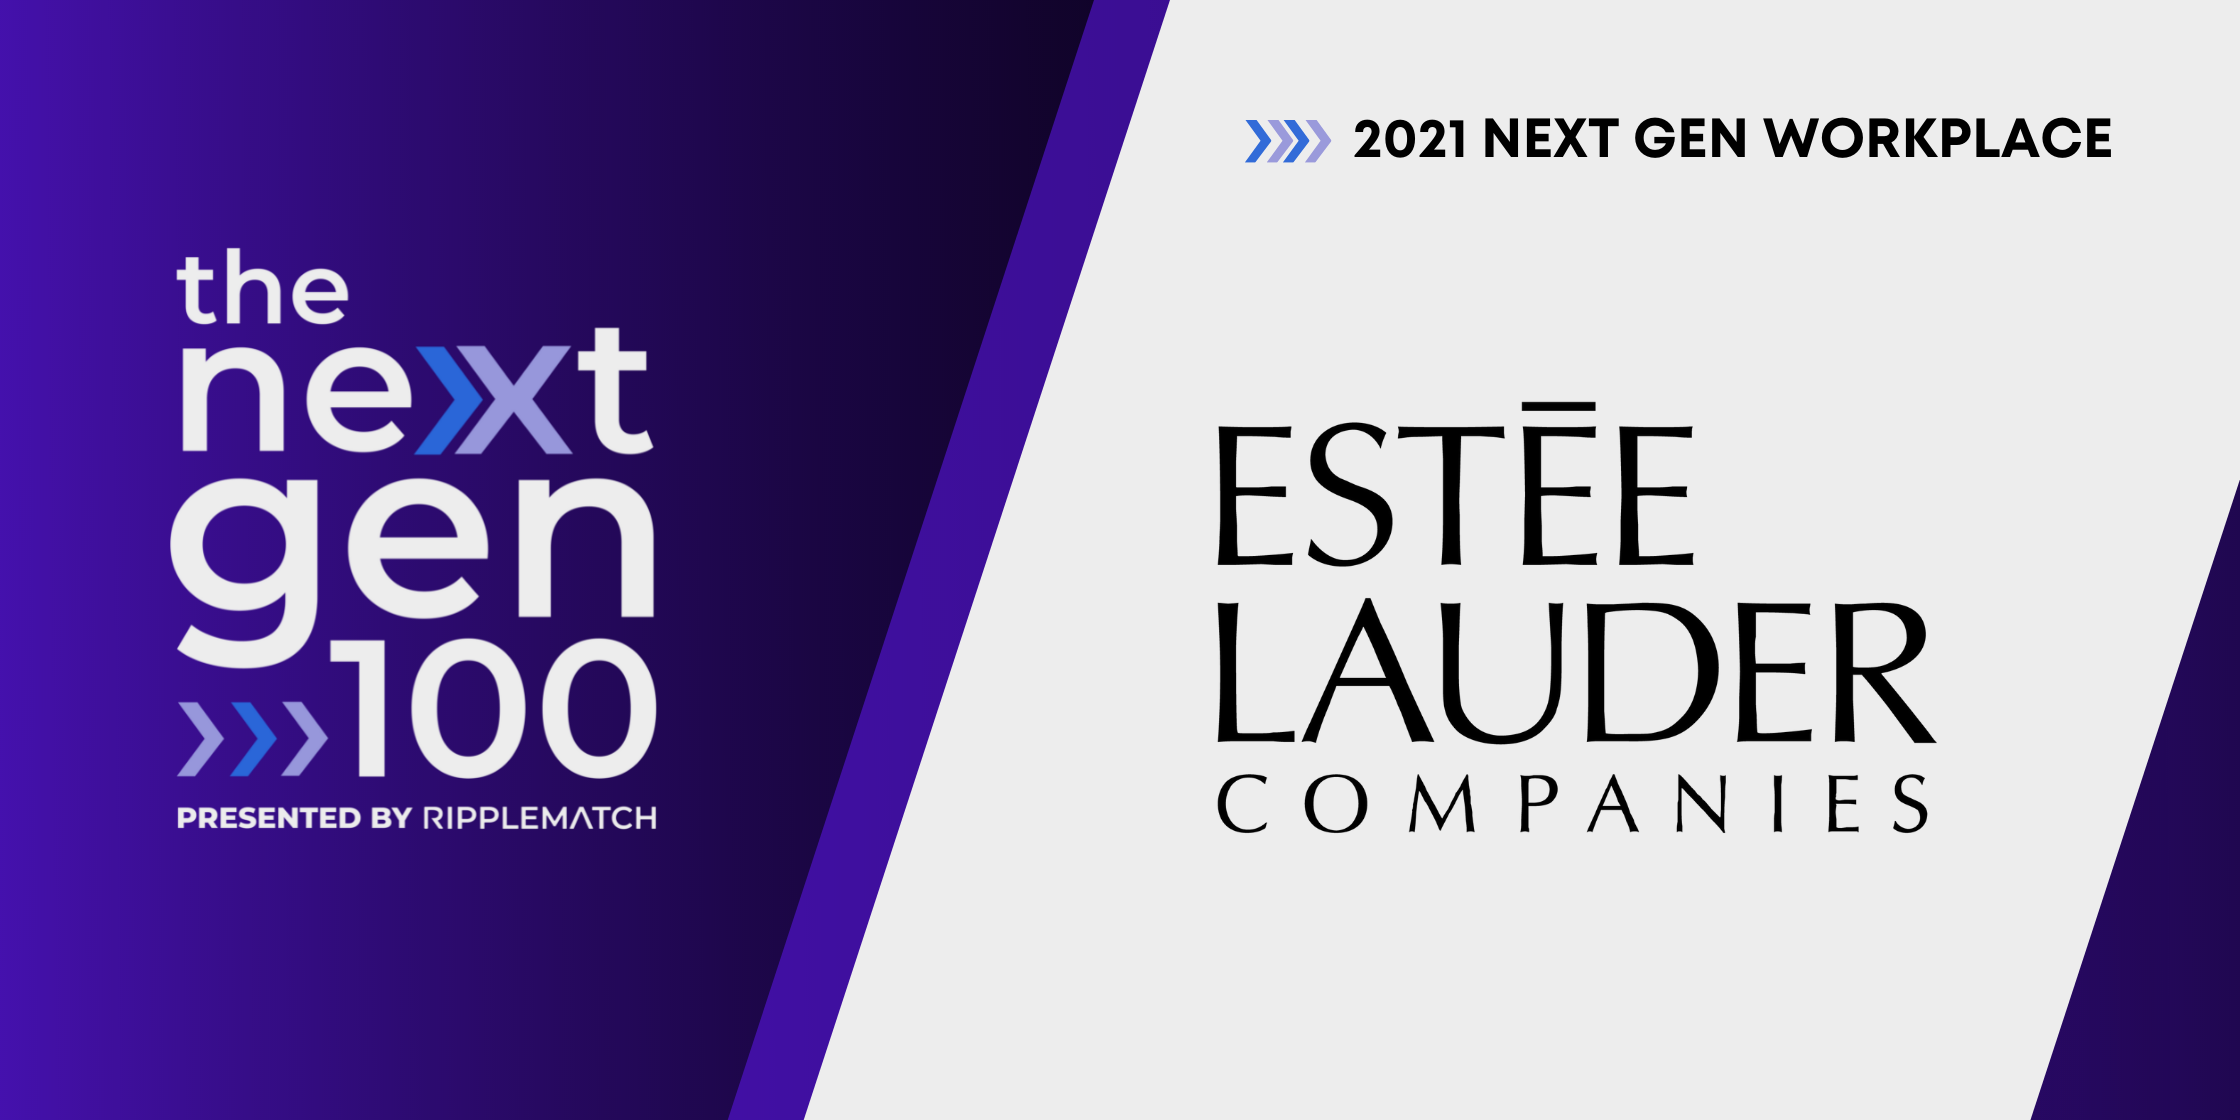 The Estée Lauder Companies : Top 20 Companies in 2021